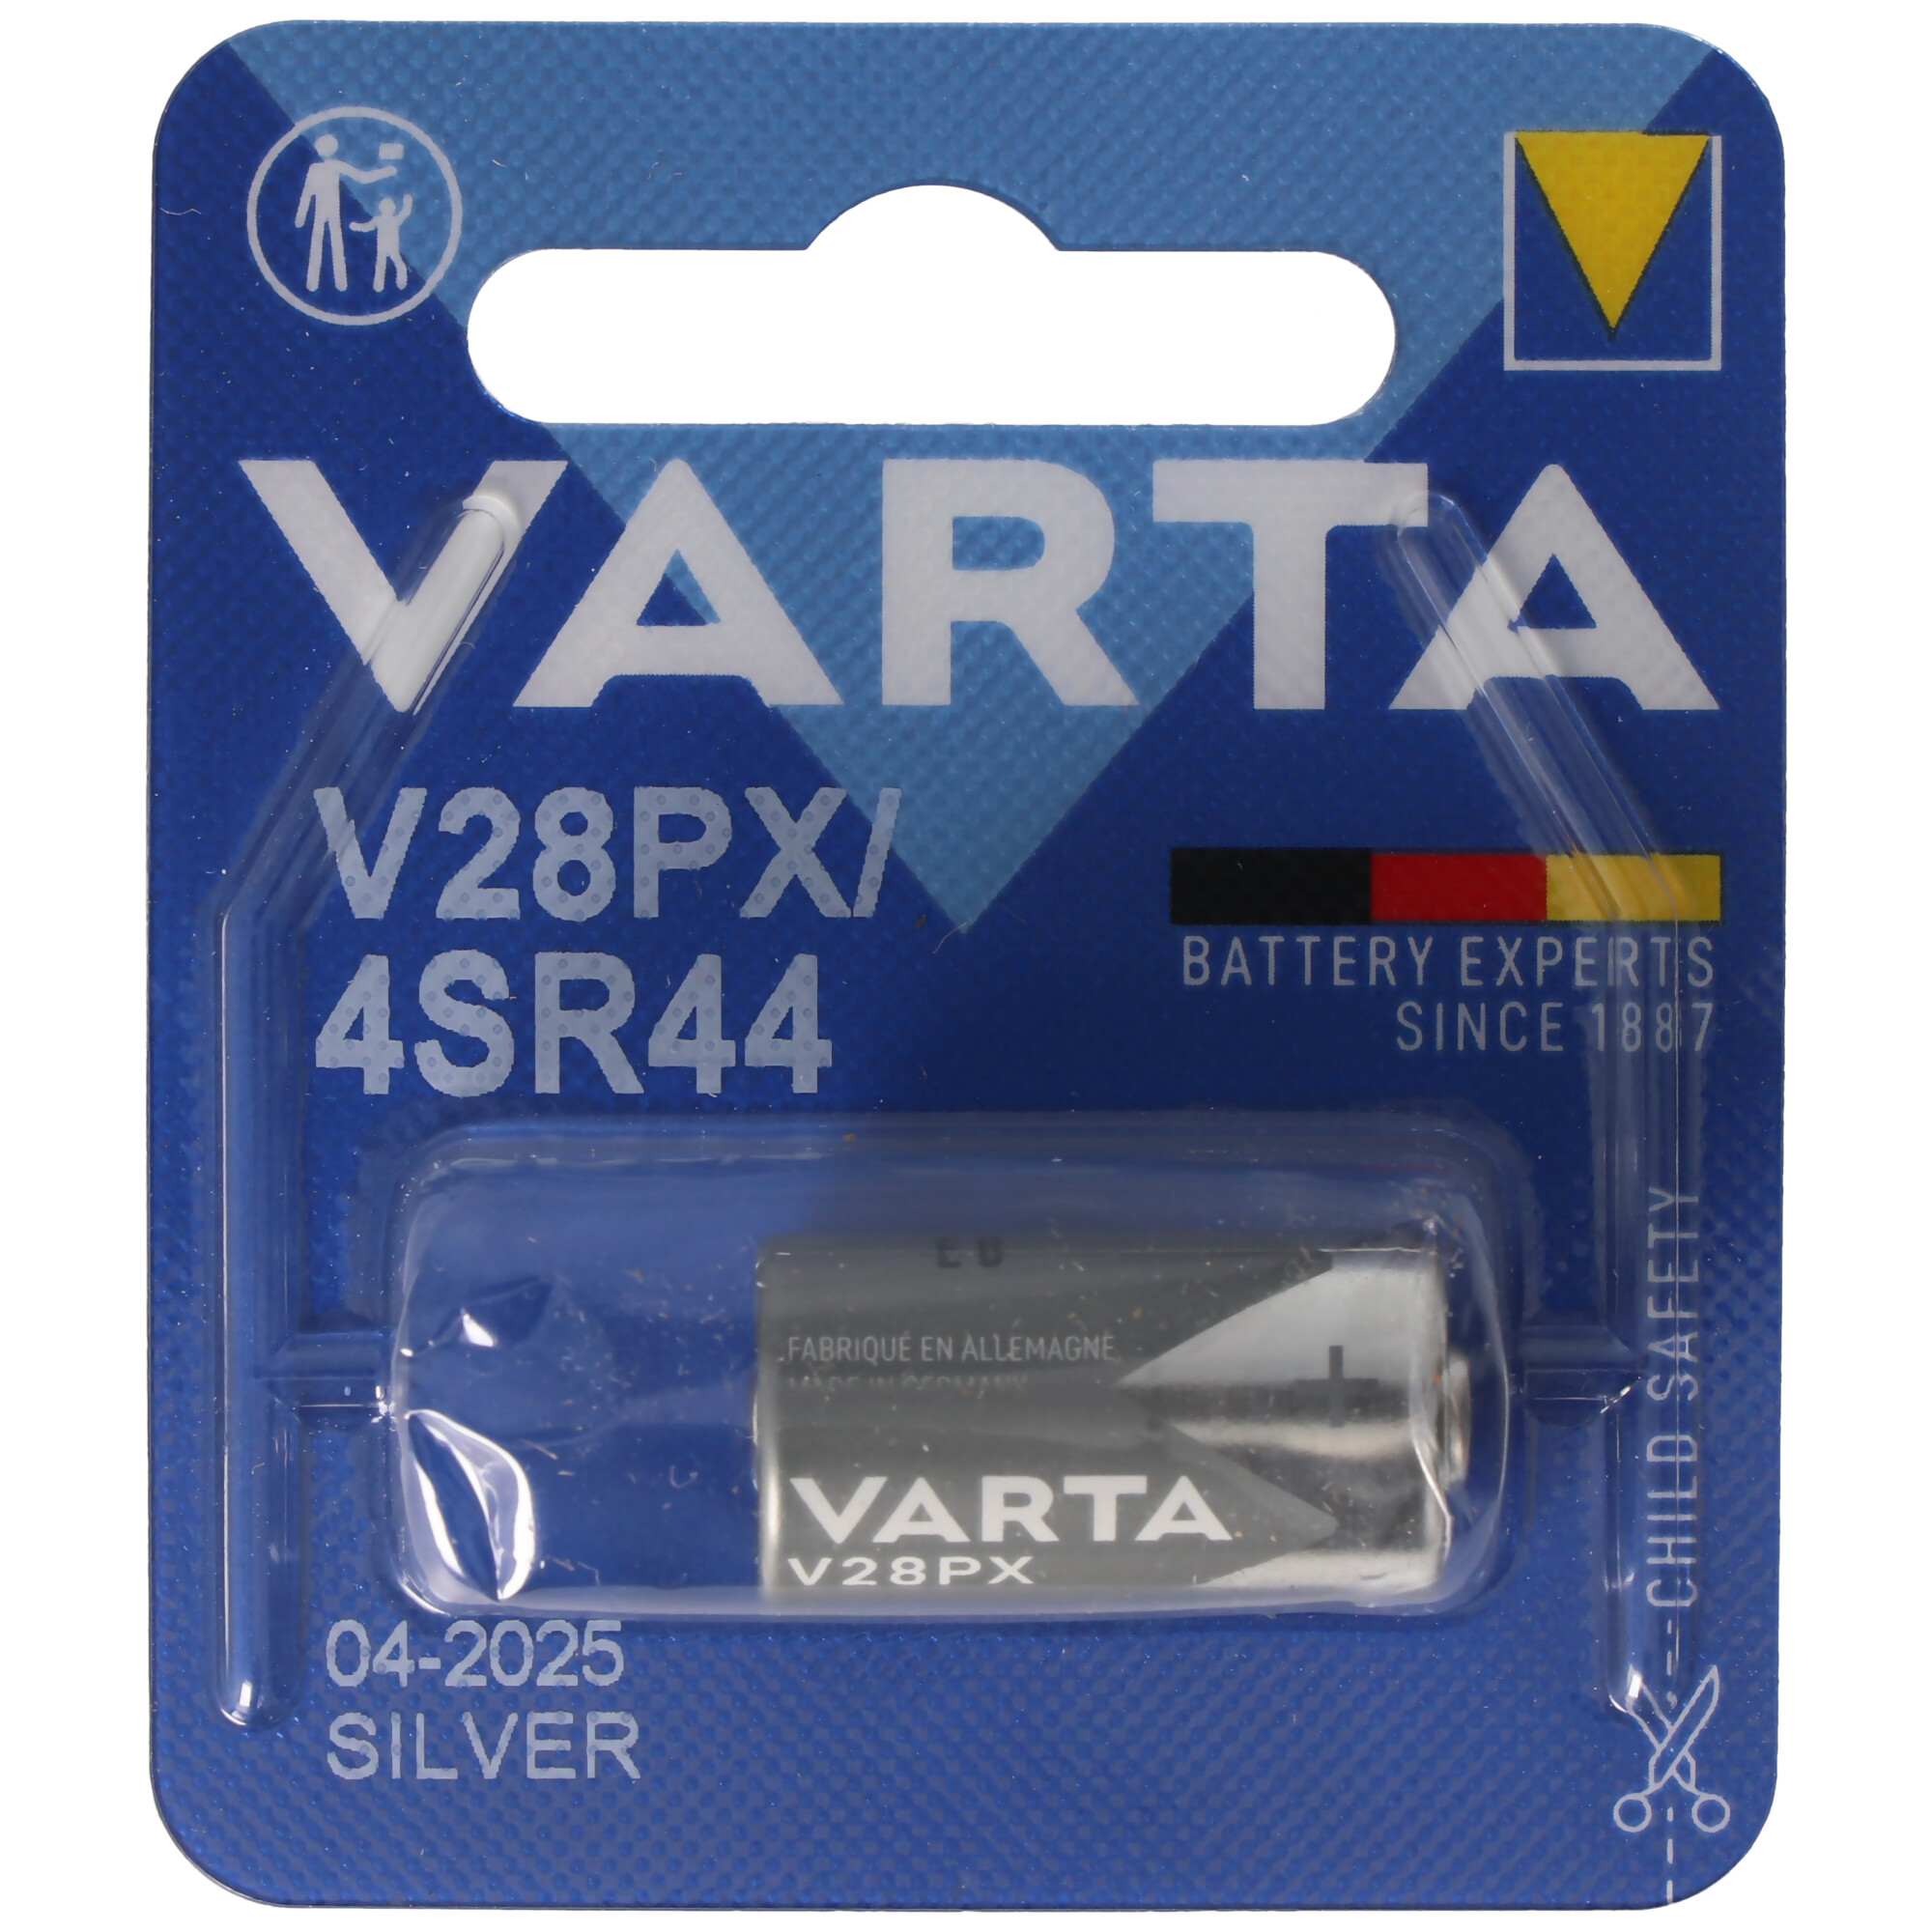 2 x Varta V28PX Silberoxid 6,2V Foto Batterie 4028 145mAh PX28 4SR44 KS28 A544